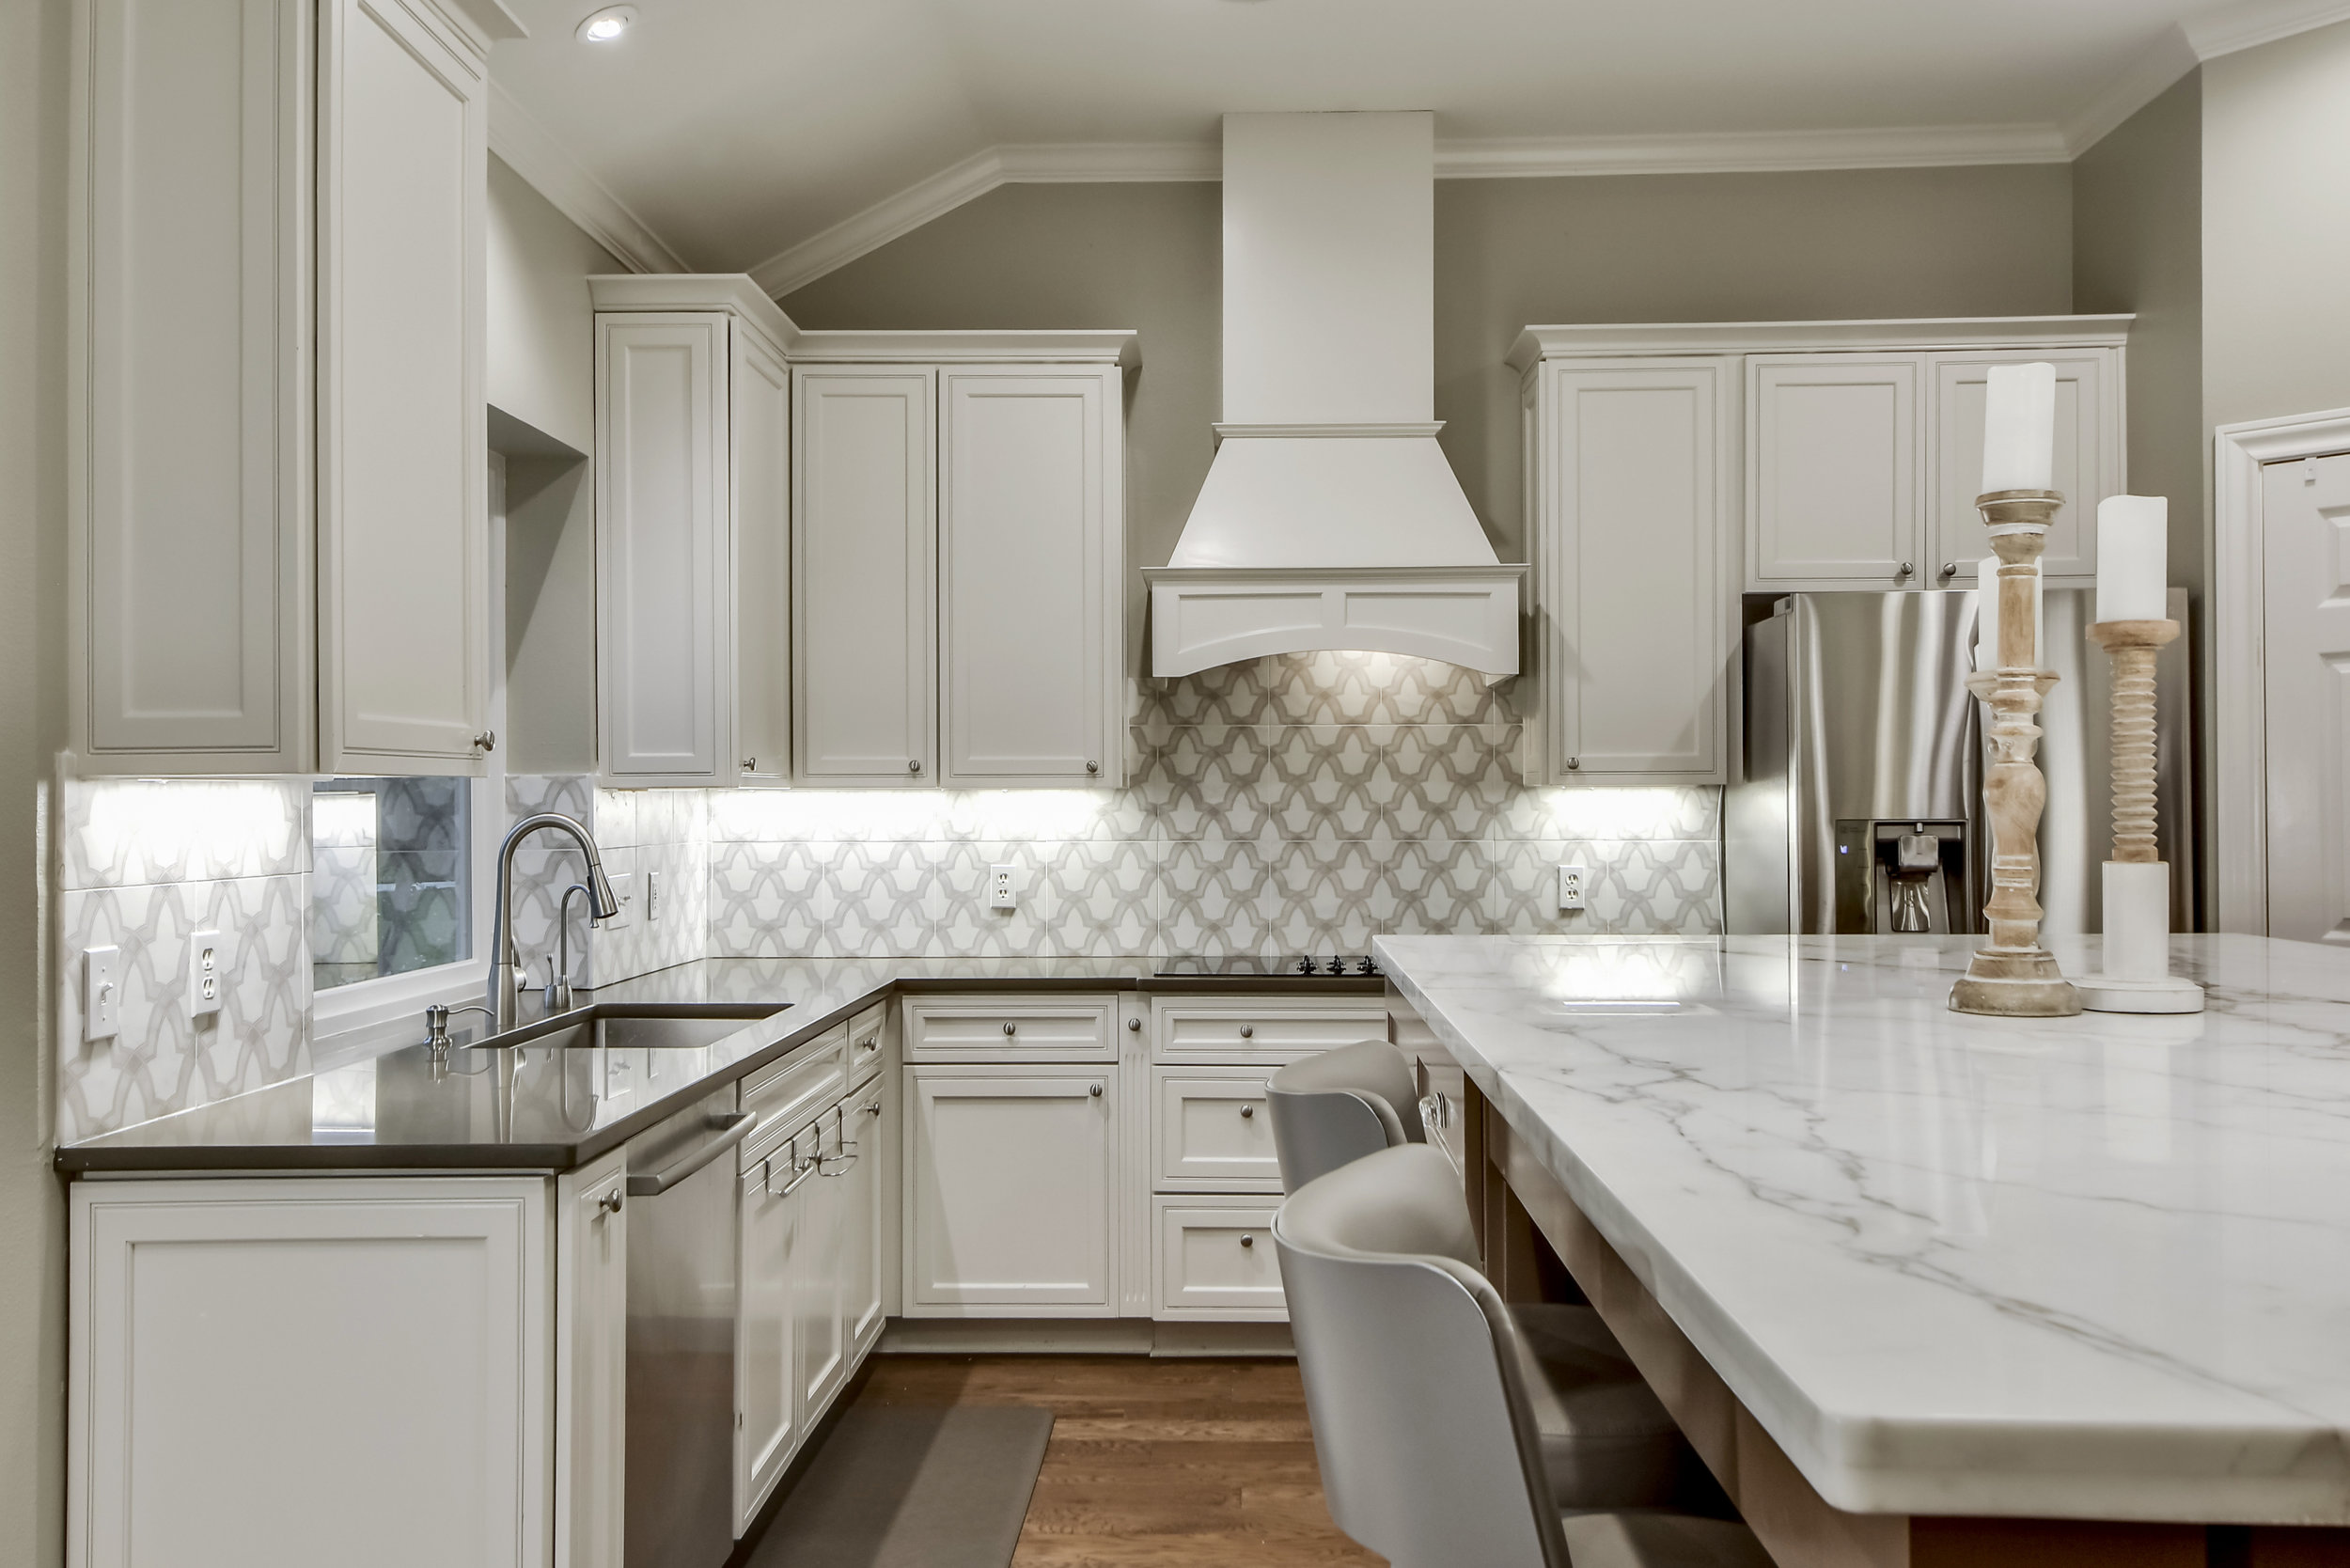 White Kitchen Interior Design with Beautiful Tile Backsplash 